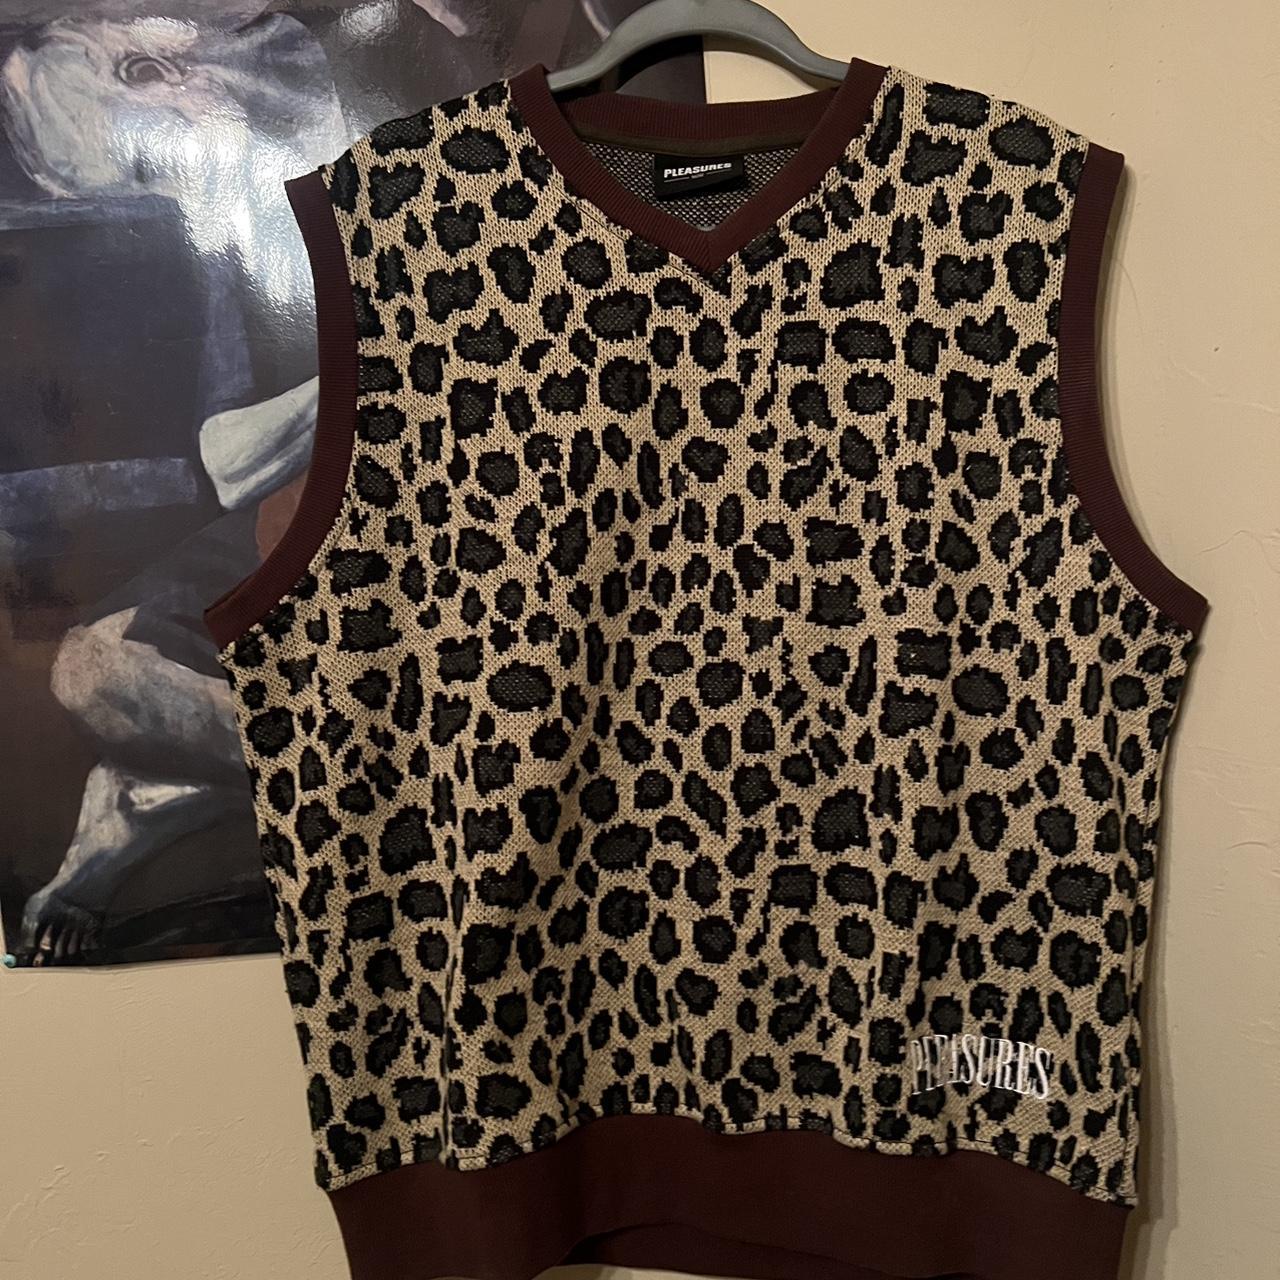 Pleasure Leopard Sweater Vest 10/10 condition Open... - Depop